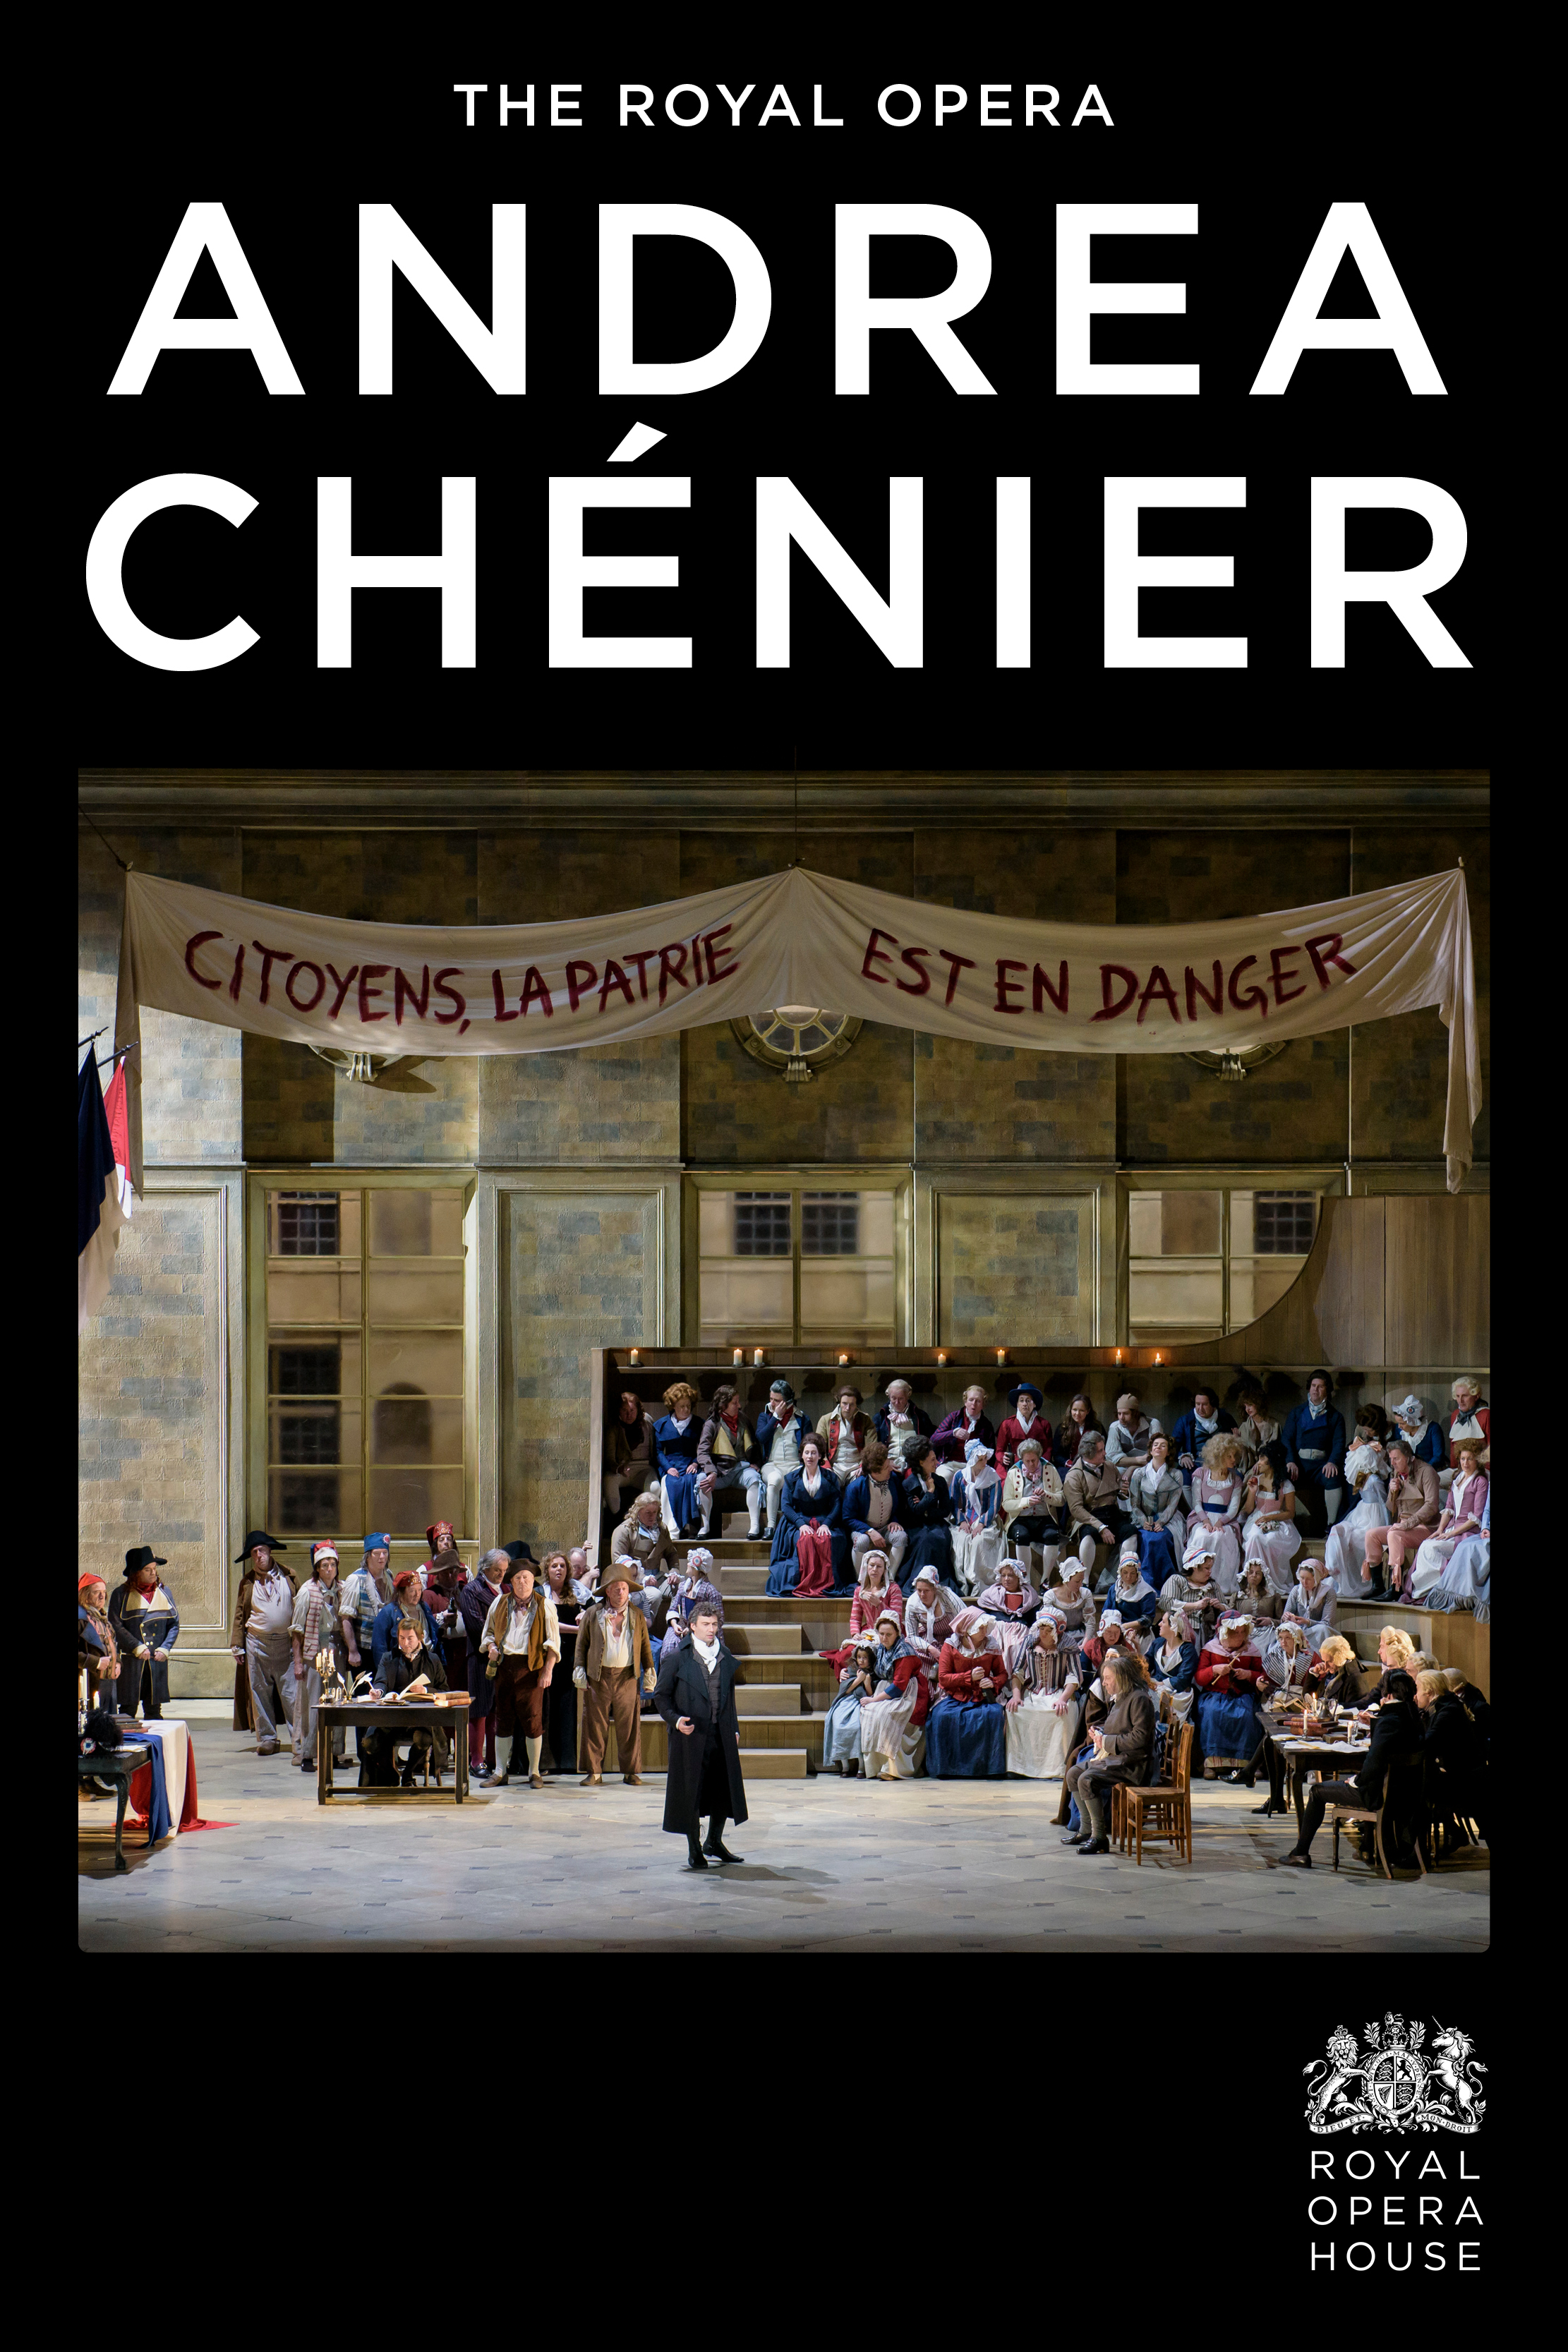 The Royal Opera House Live presents Andrea Chenier - Giordano's epic historical drama